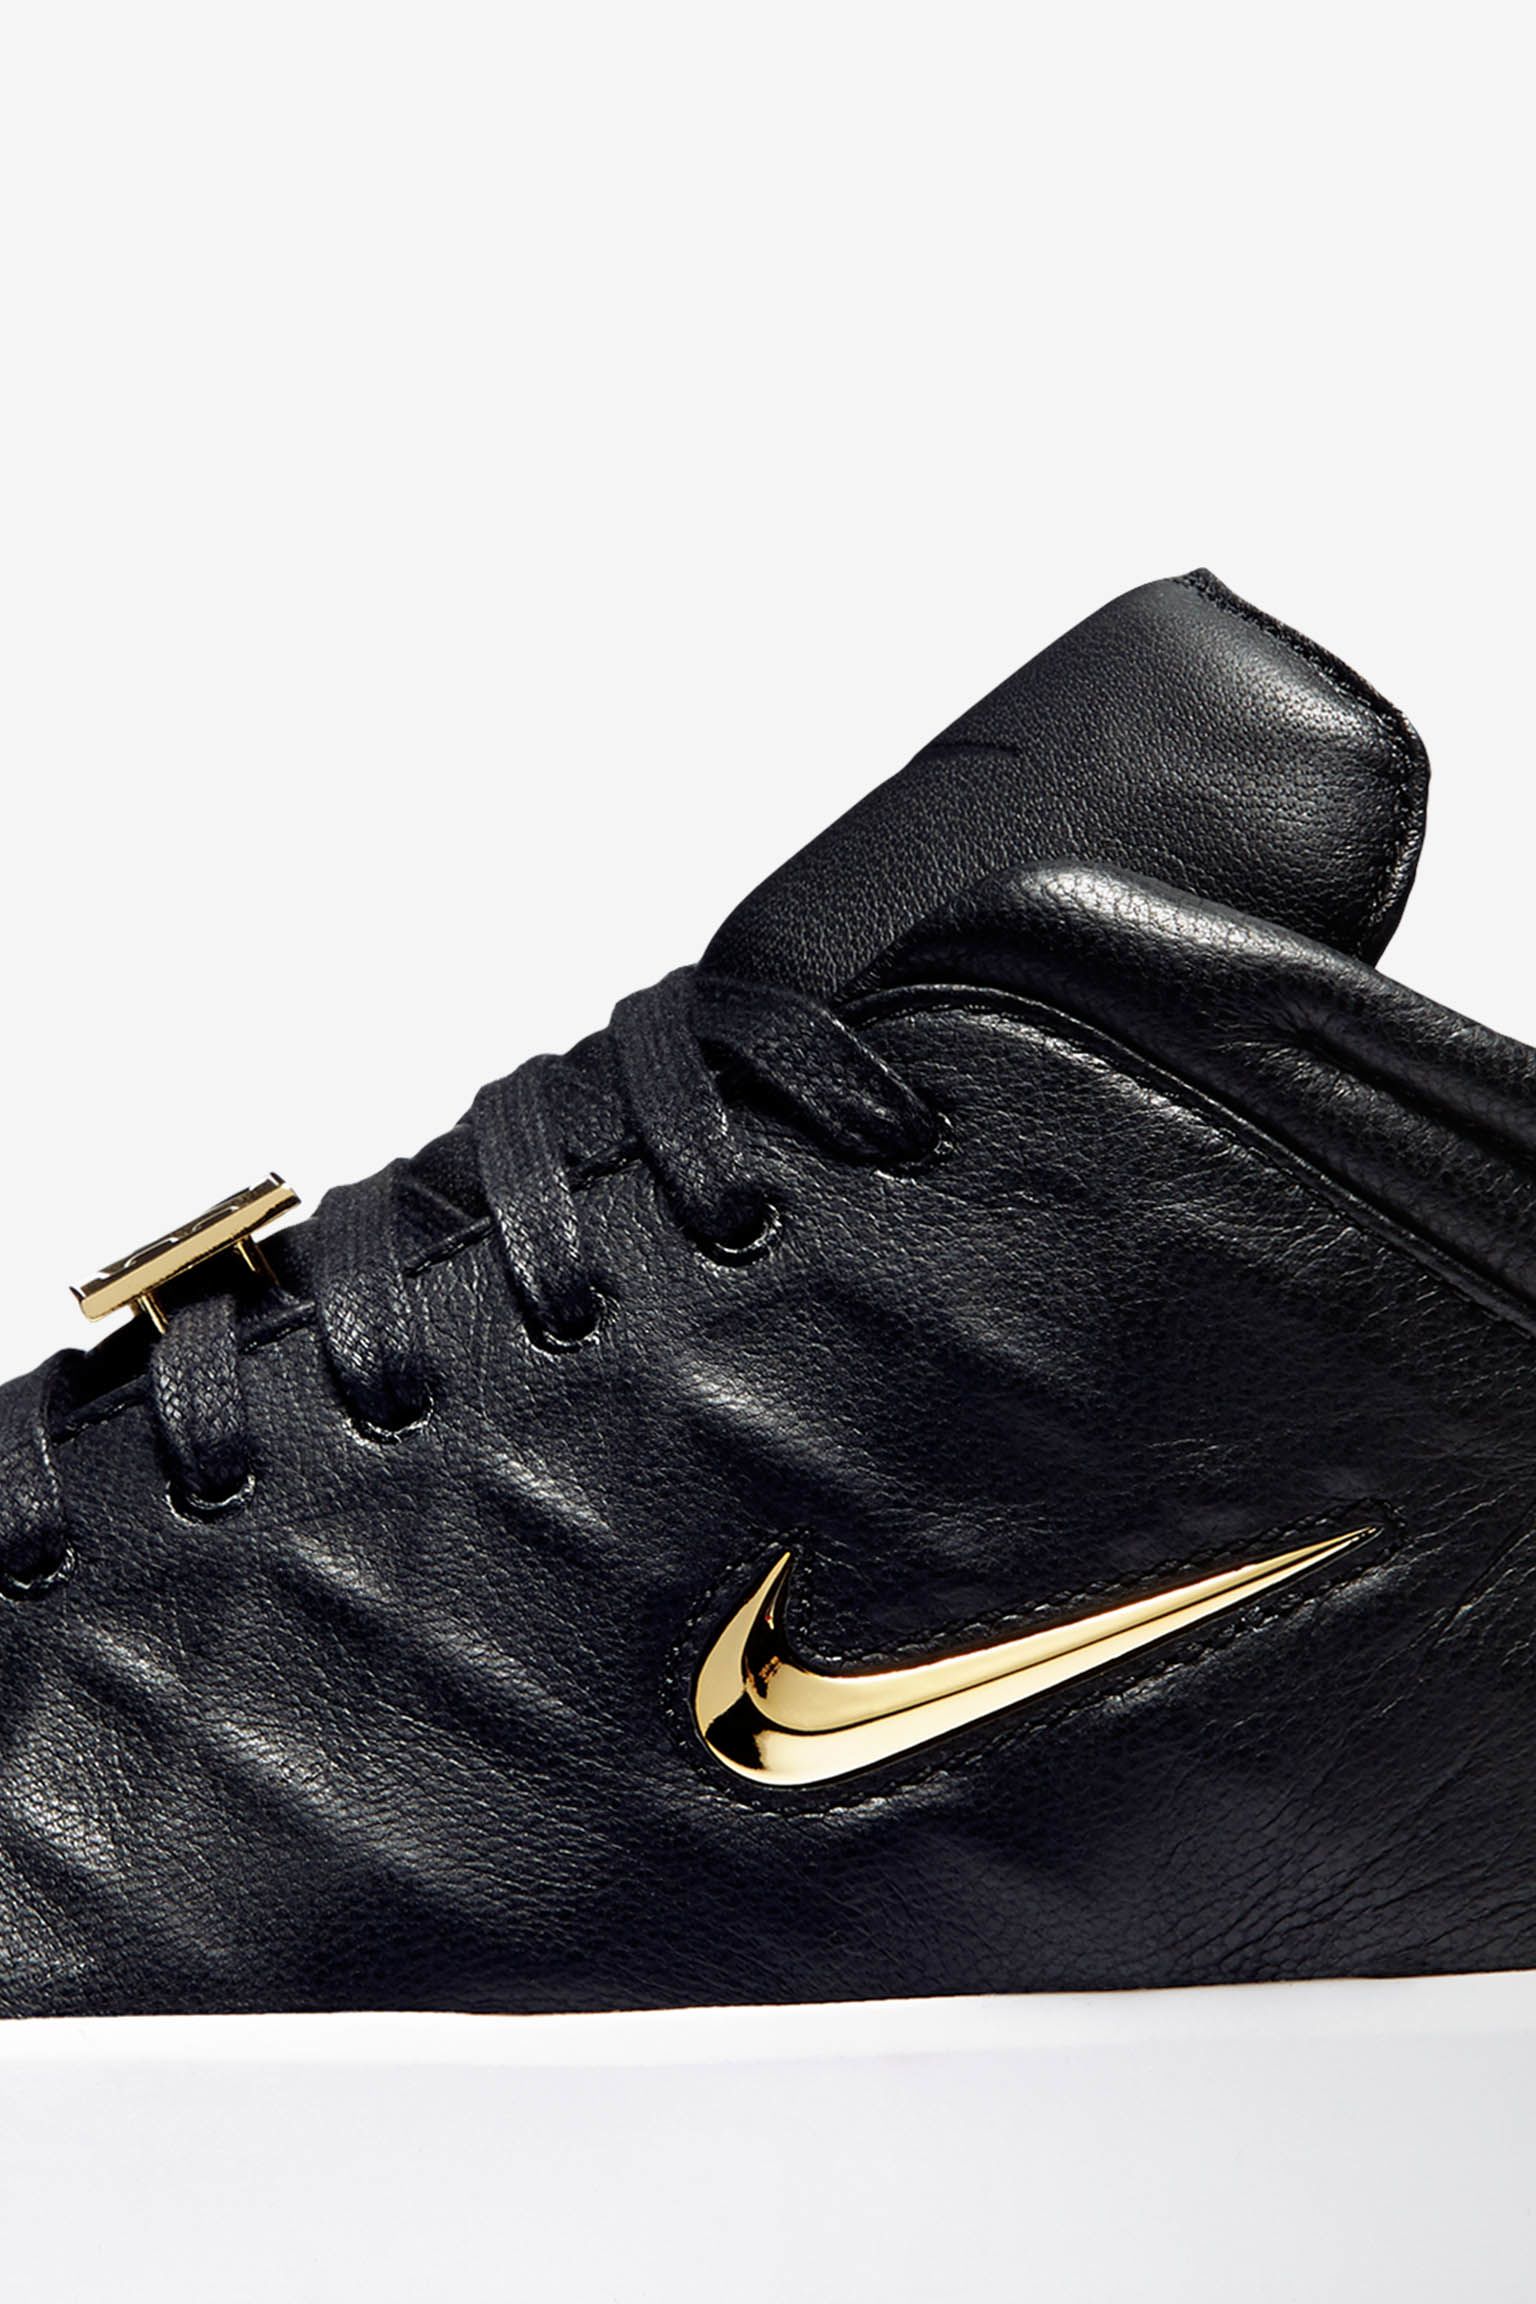 lema Incorrecto aerolíneas Nike Tiempo Vetta 17 'Black & Metallic gold'. Nike SNKRS